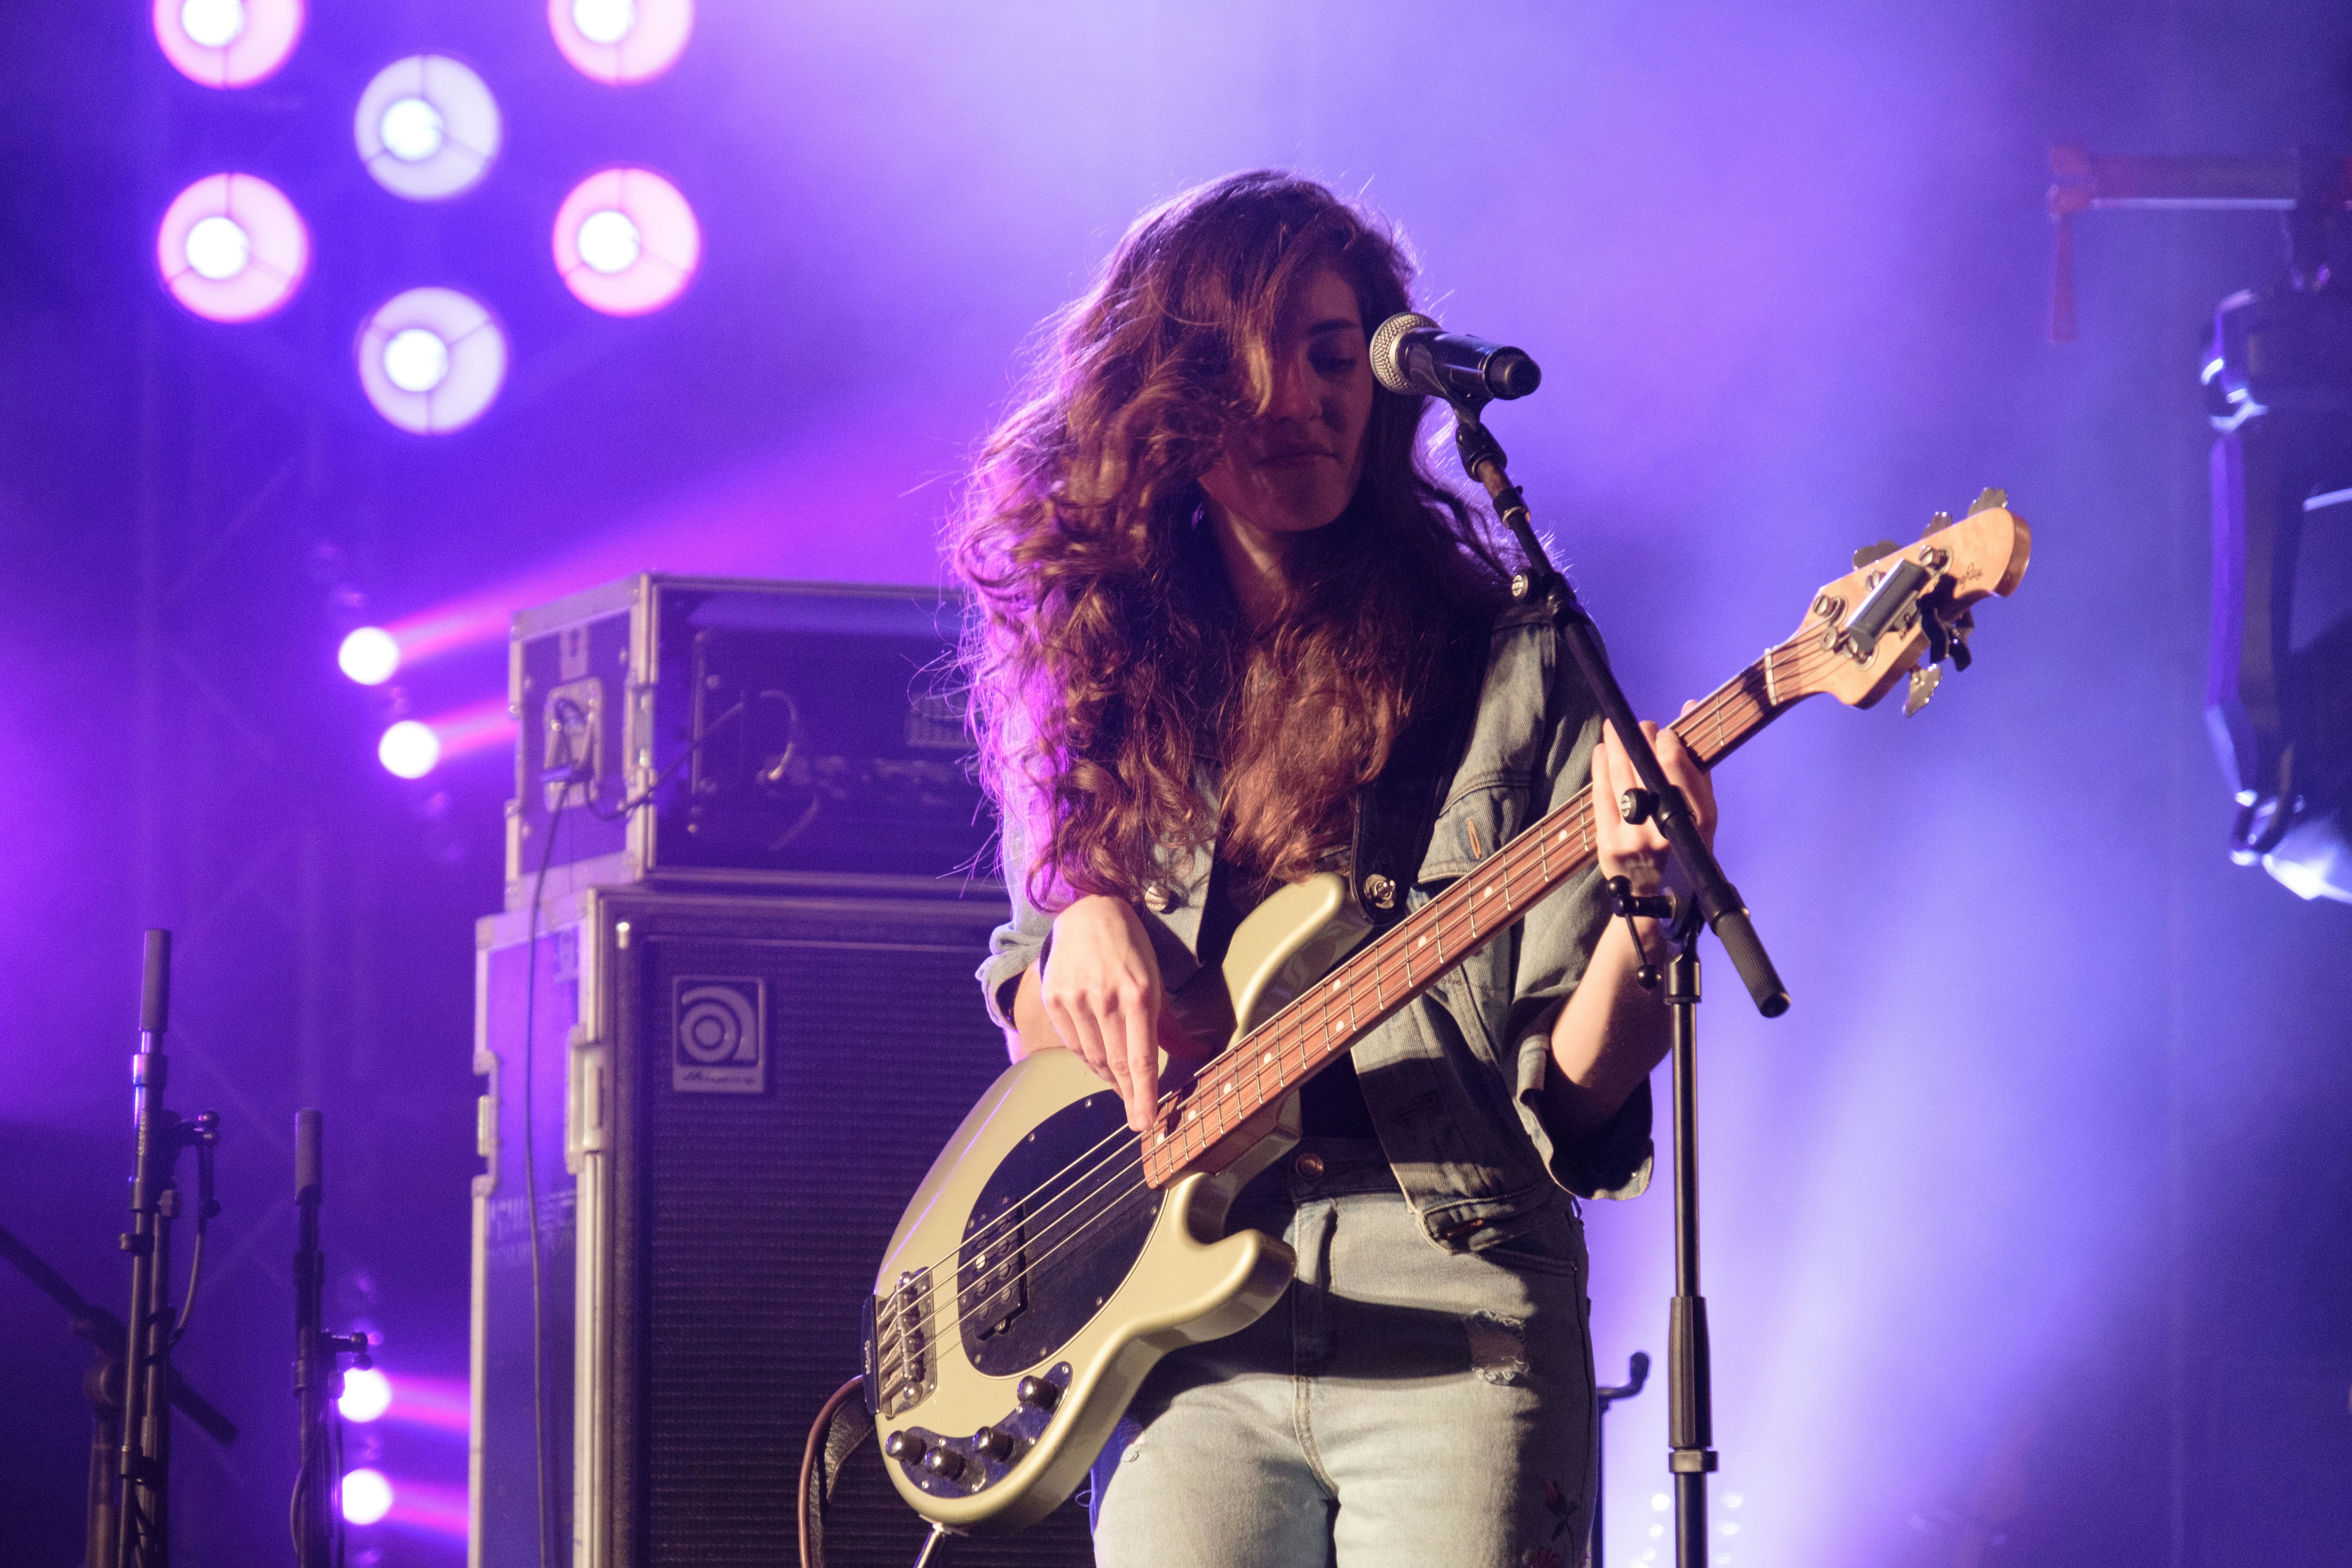 feminist musician playing bass guitar on music festival or concert